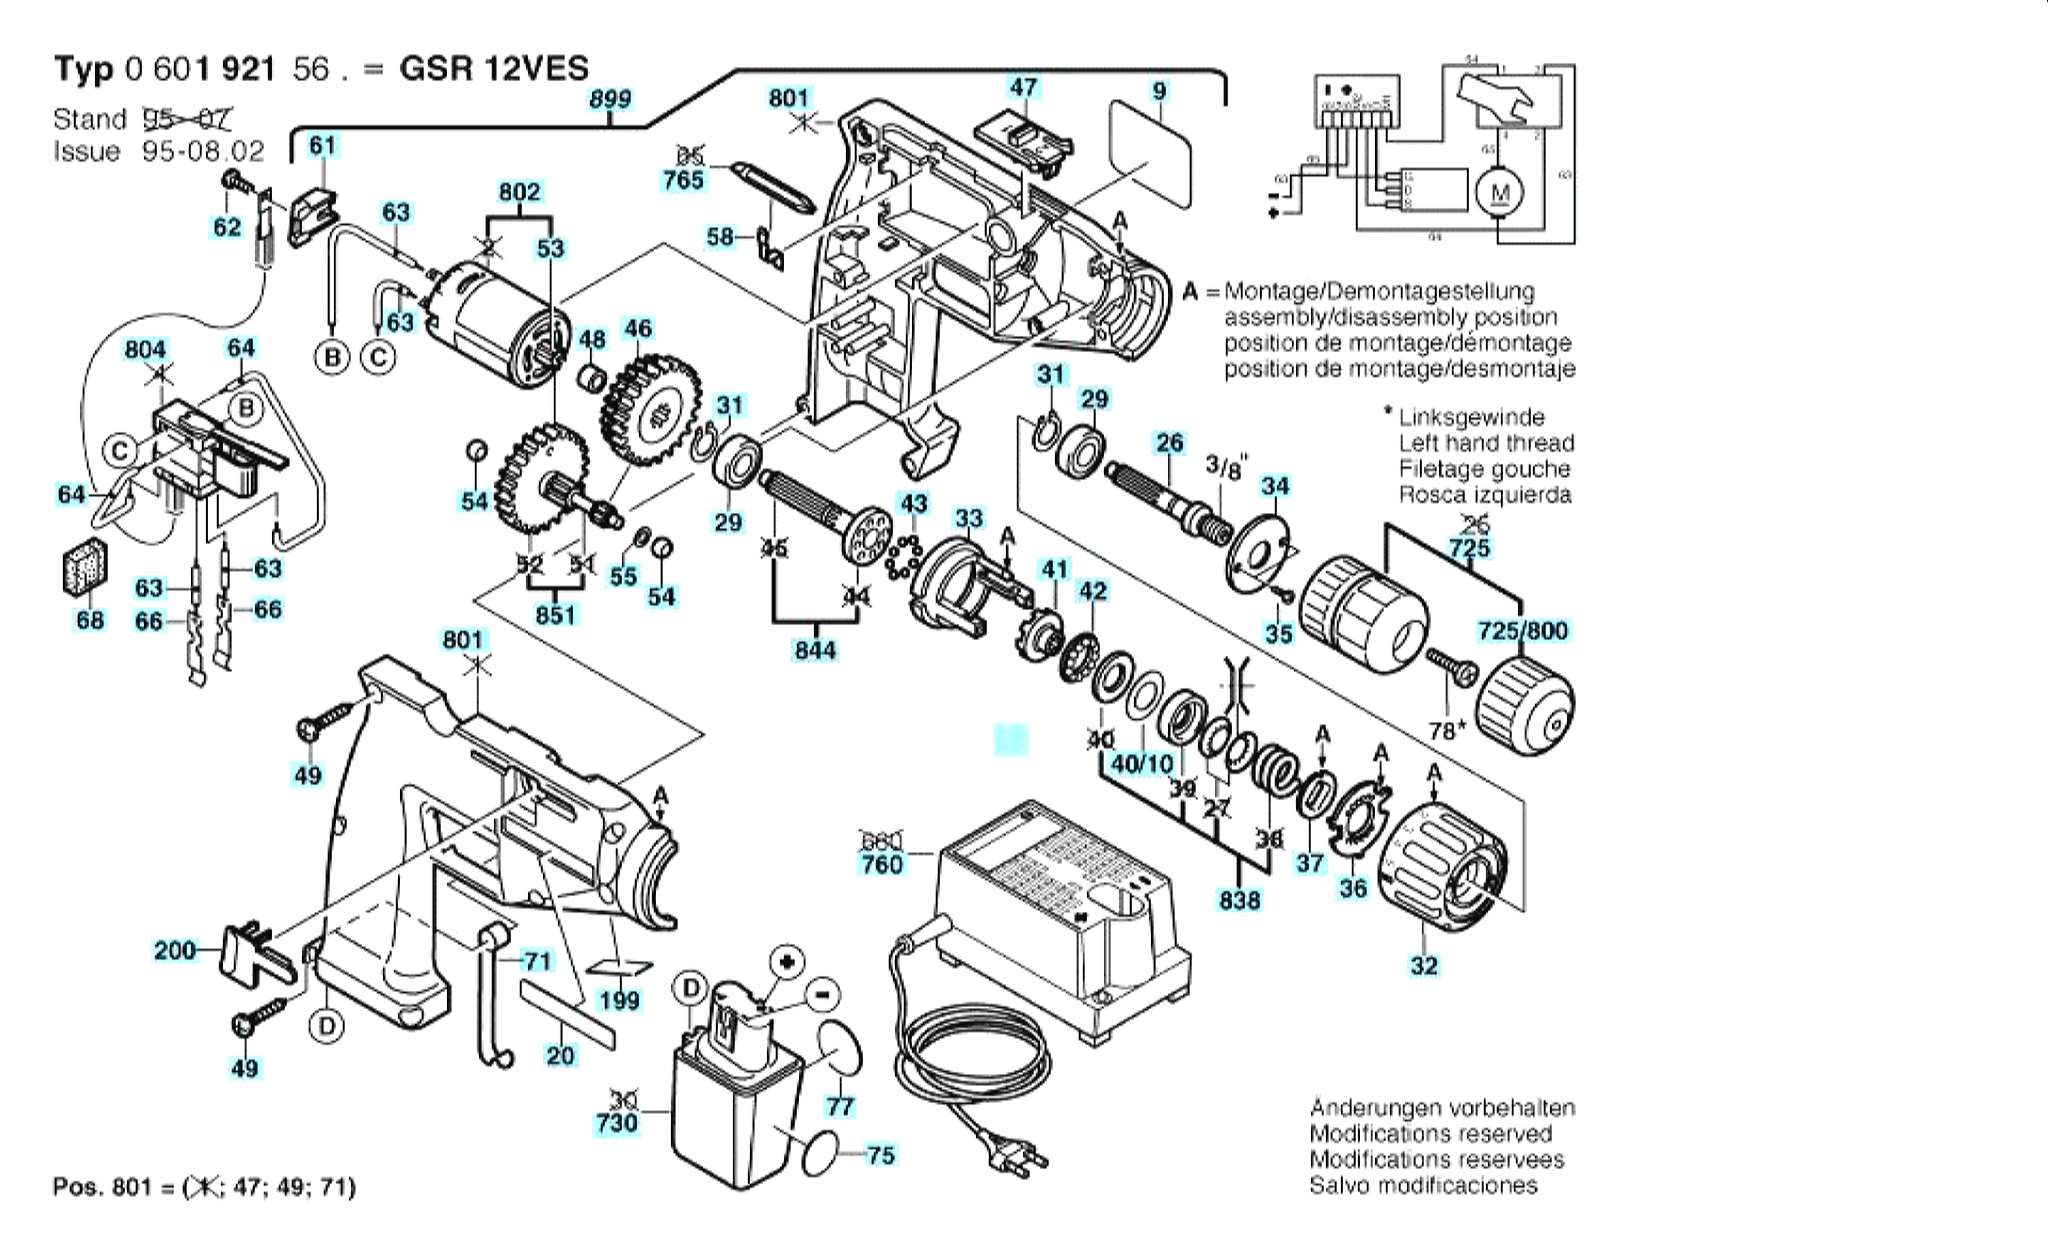 Запчасти, схема и деталировка Bosch GSR 12 VES (ТИП 0601921560)